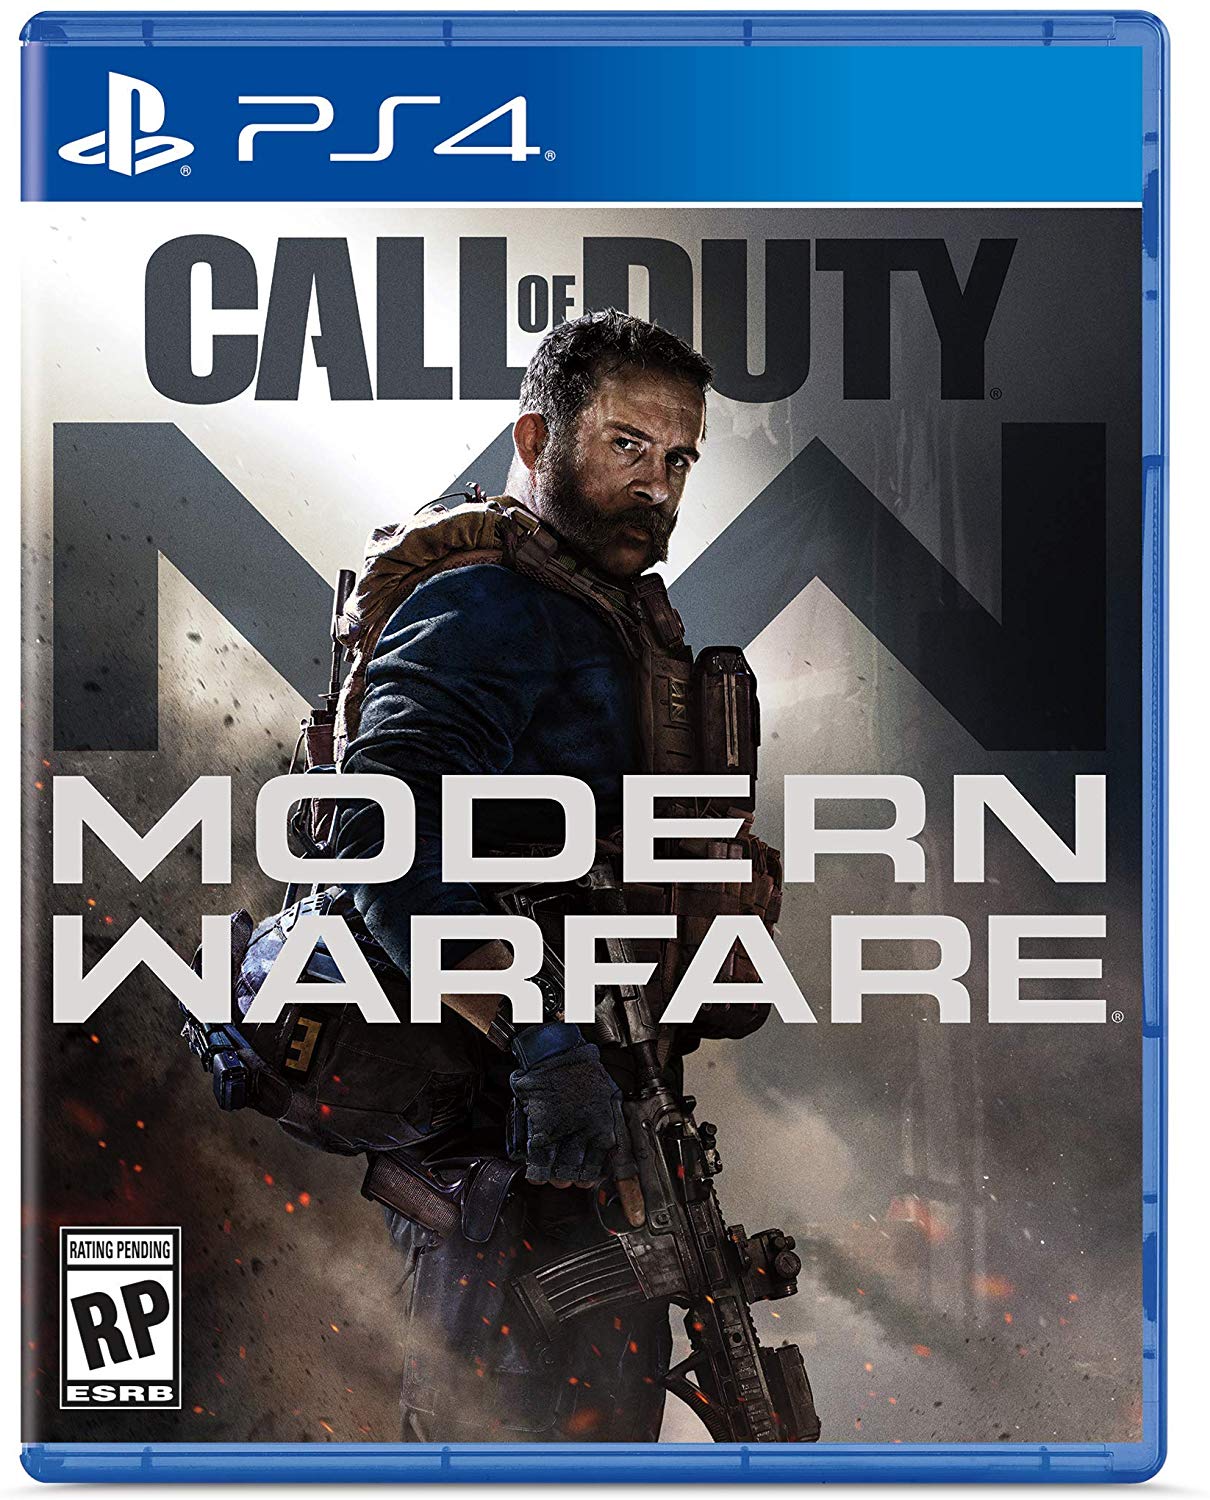 Call of Duty Modern Warfare PS4 boxart